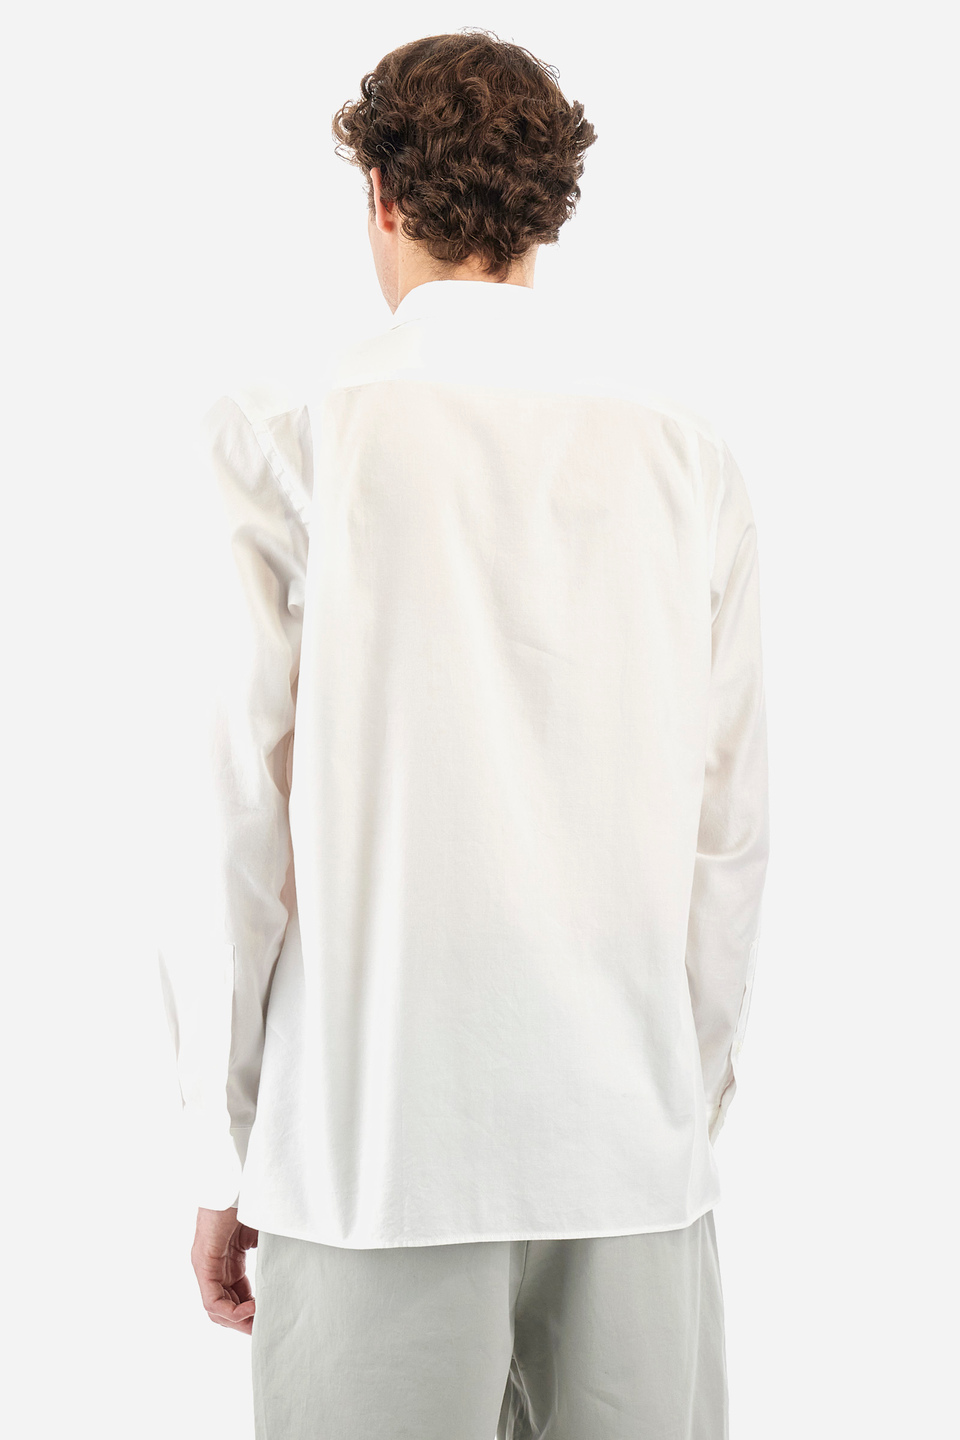 Men's shirt in a regular fit - Yamino | La Martina - Official Online Shop